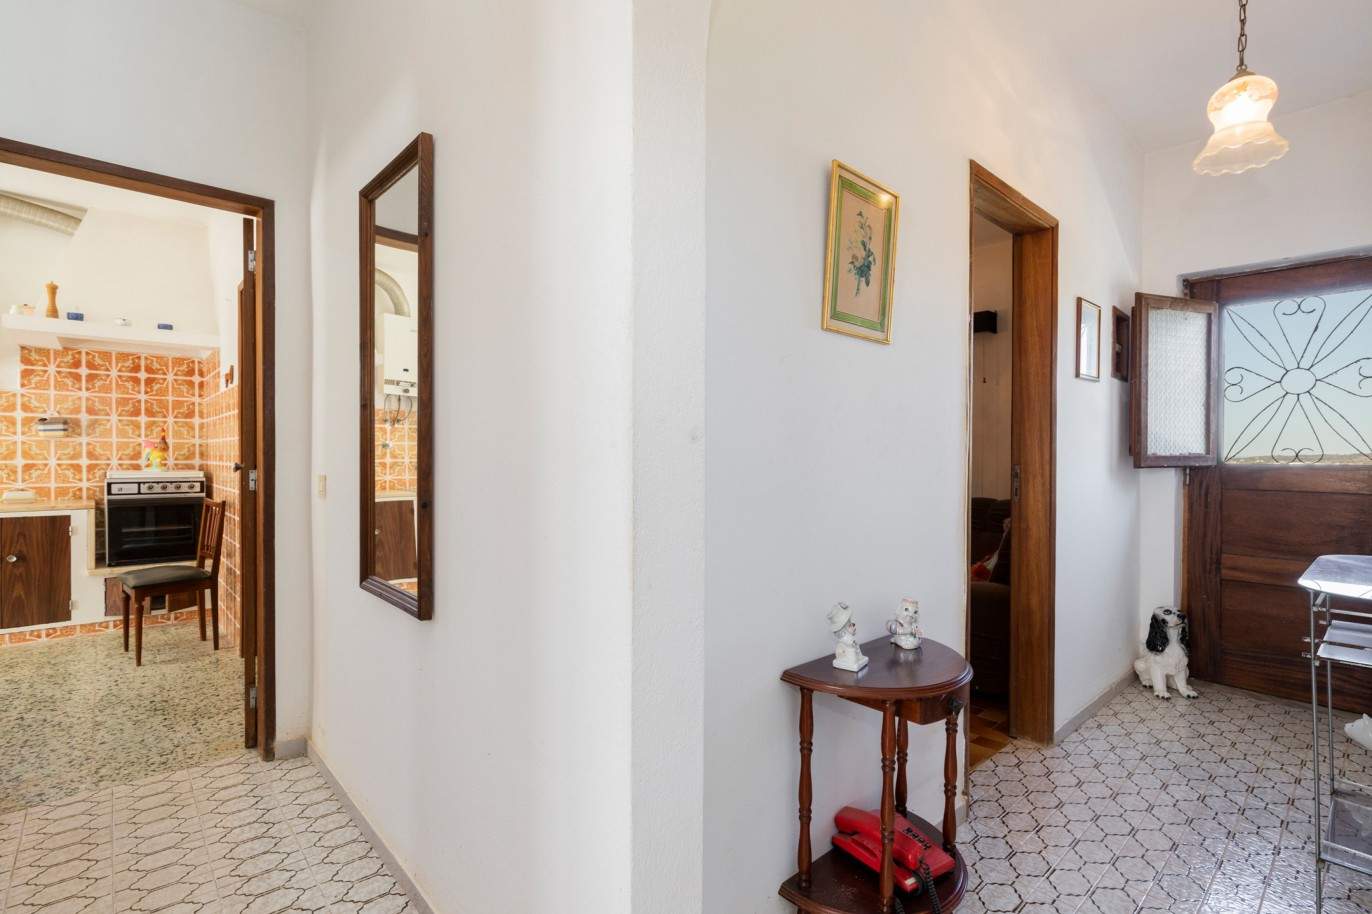 Property to remodel, for sale in Falfeira, Lagos, Algarve_210371